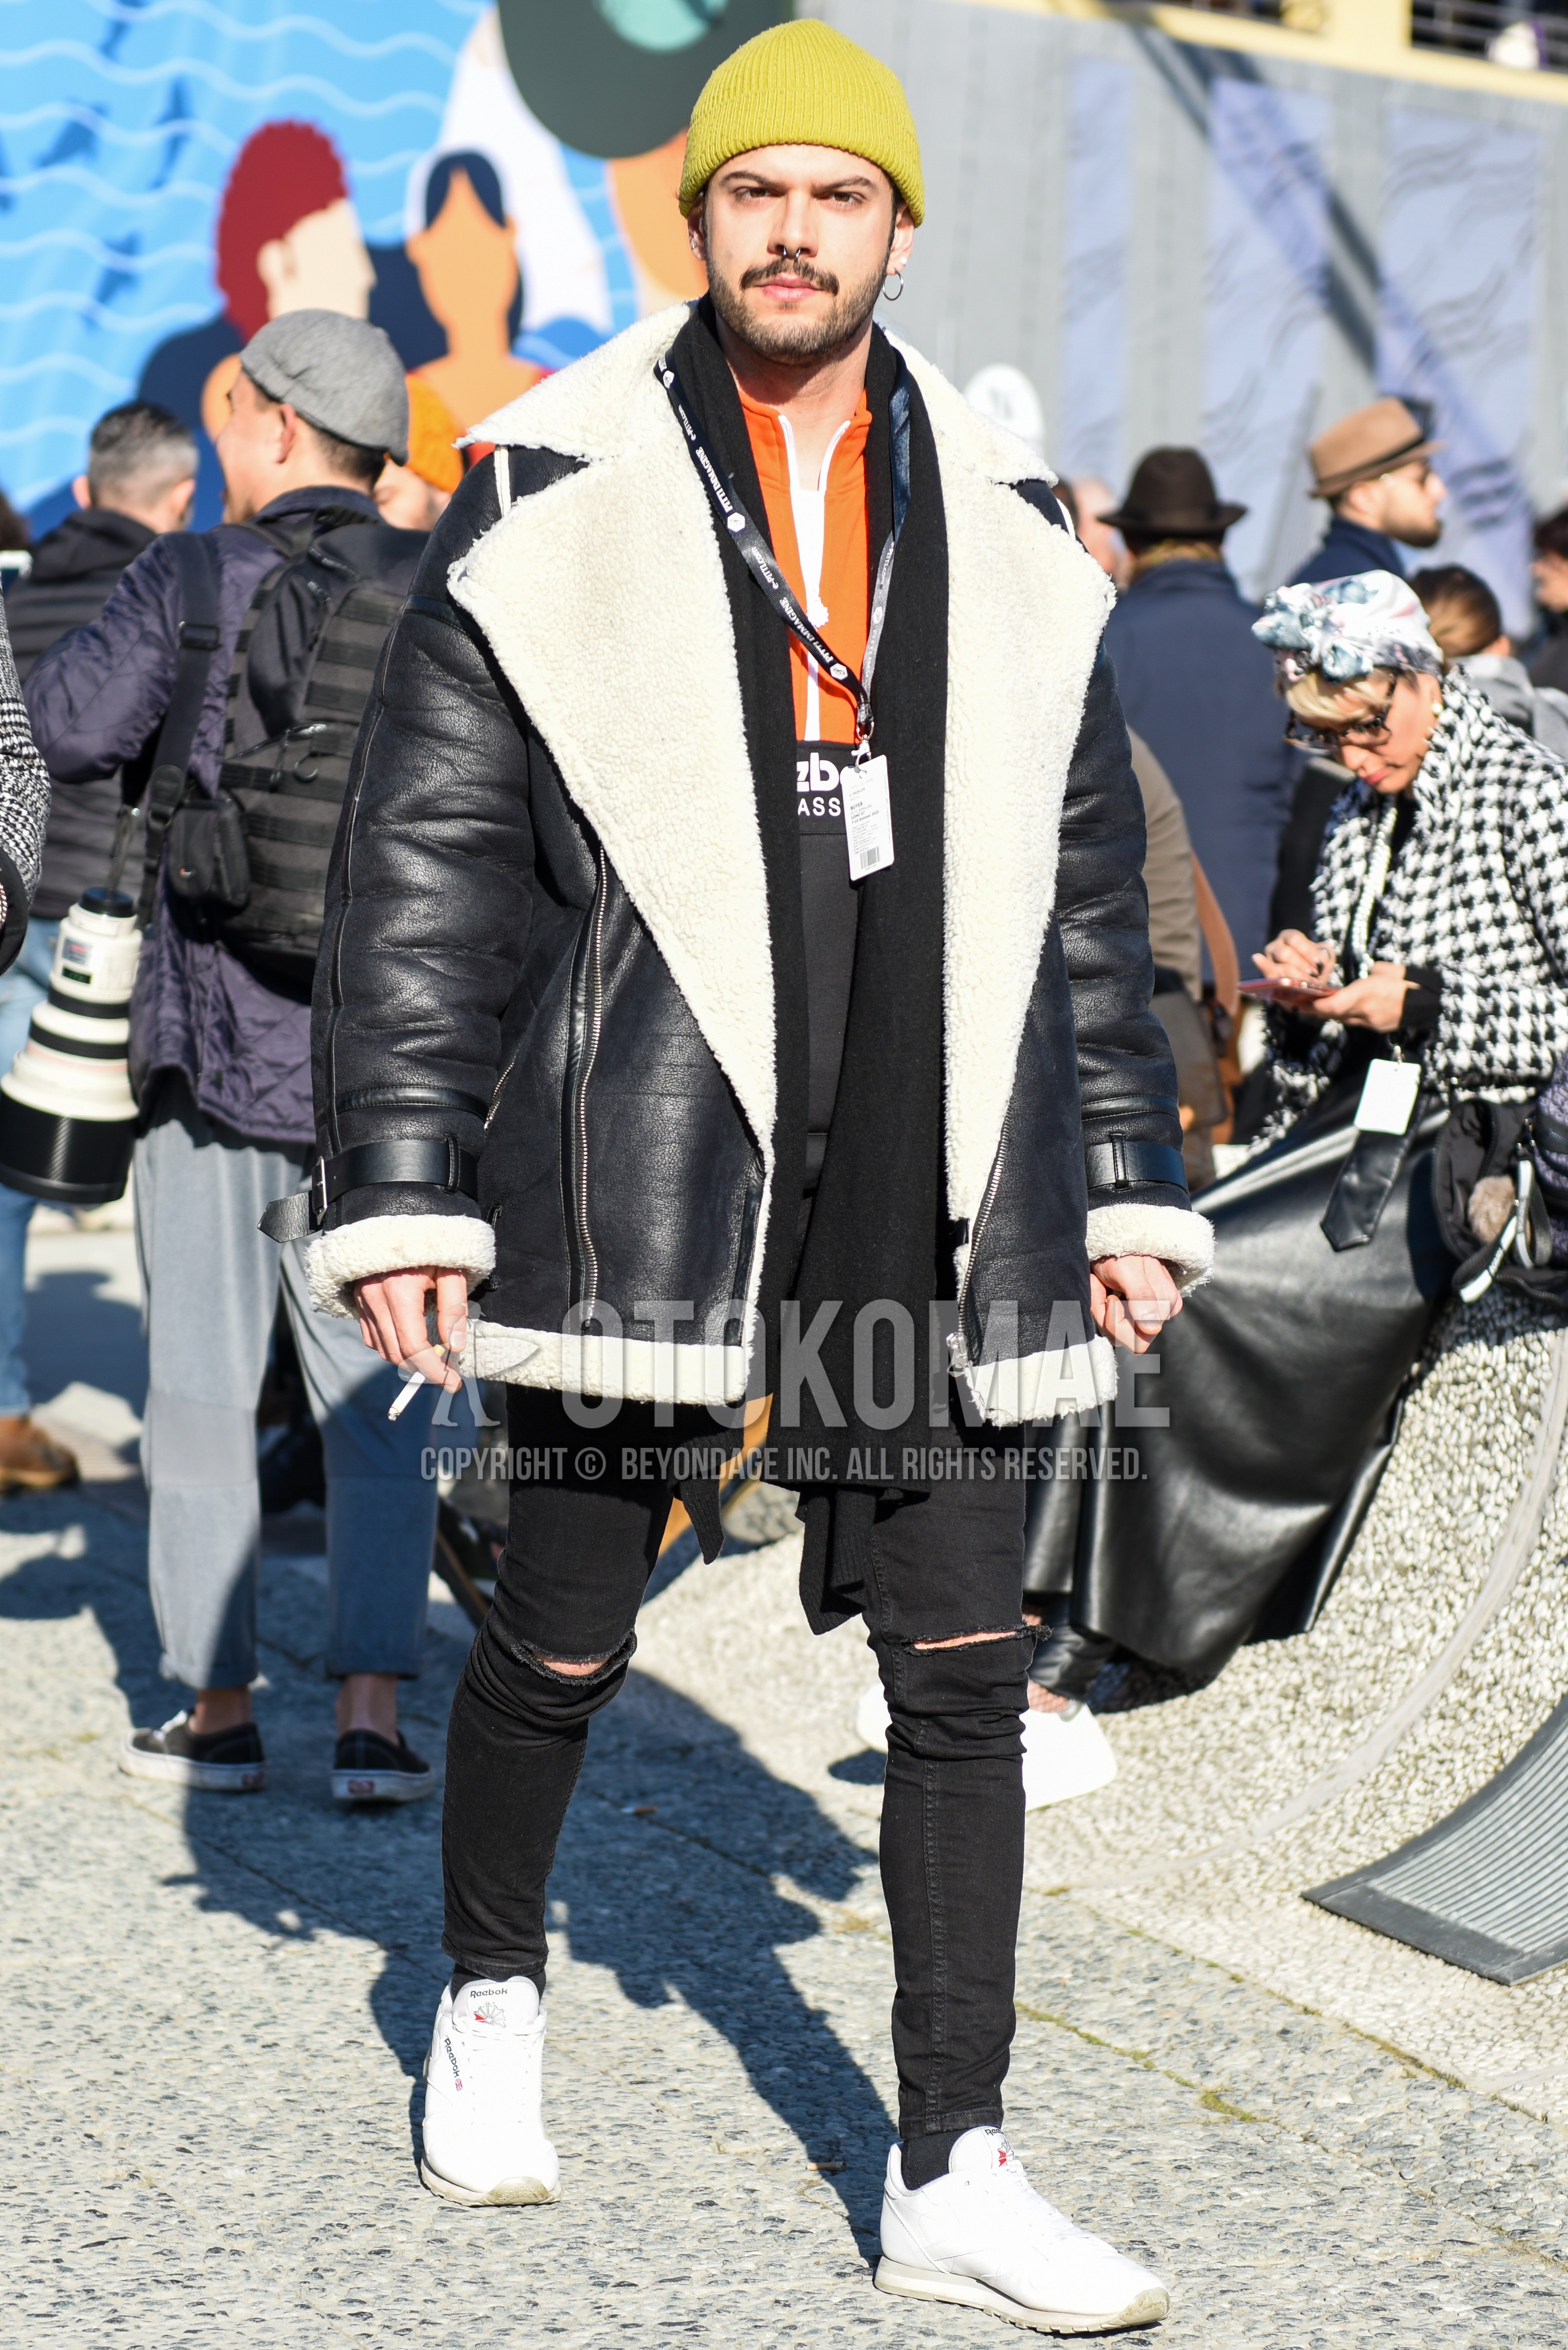 Men's winter outfit with yellow plain knit cap, black plain scarf, black plain leather jacket, orange black plain windbreaker, black plain damaged jeans, white low-cut sneakers.